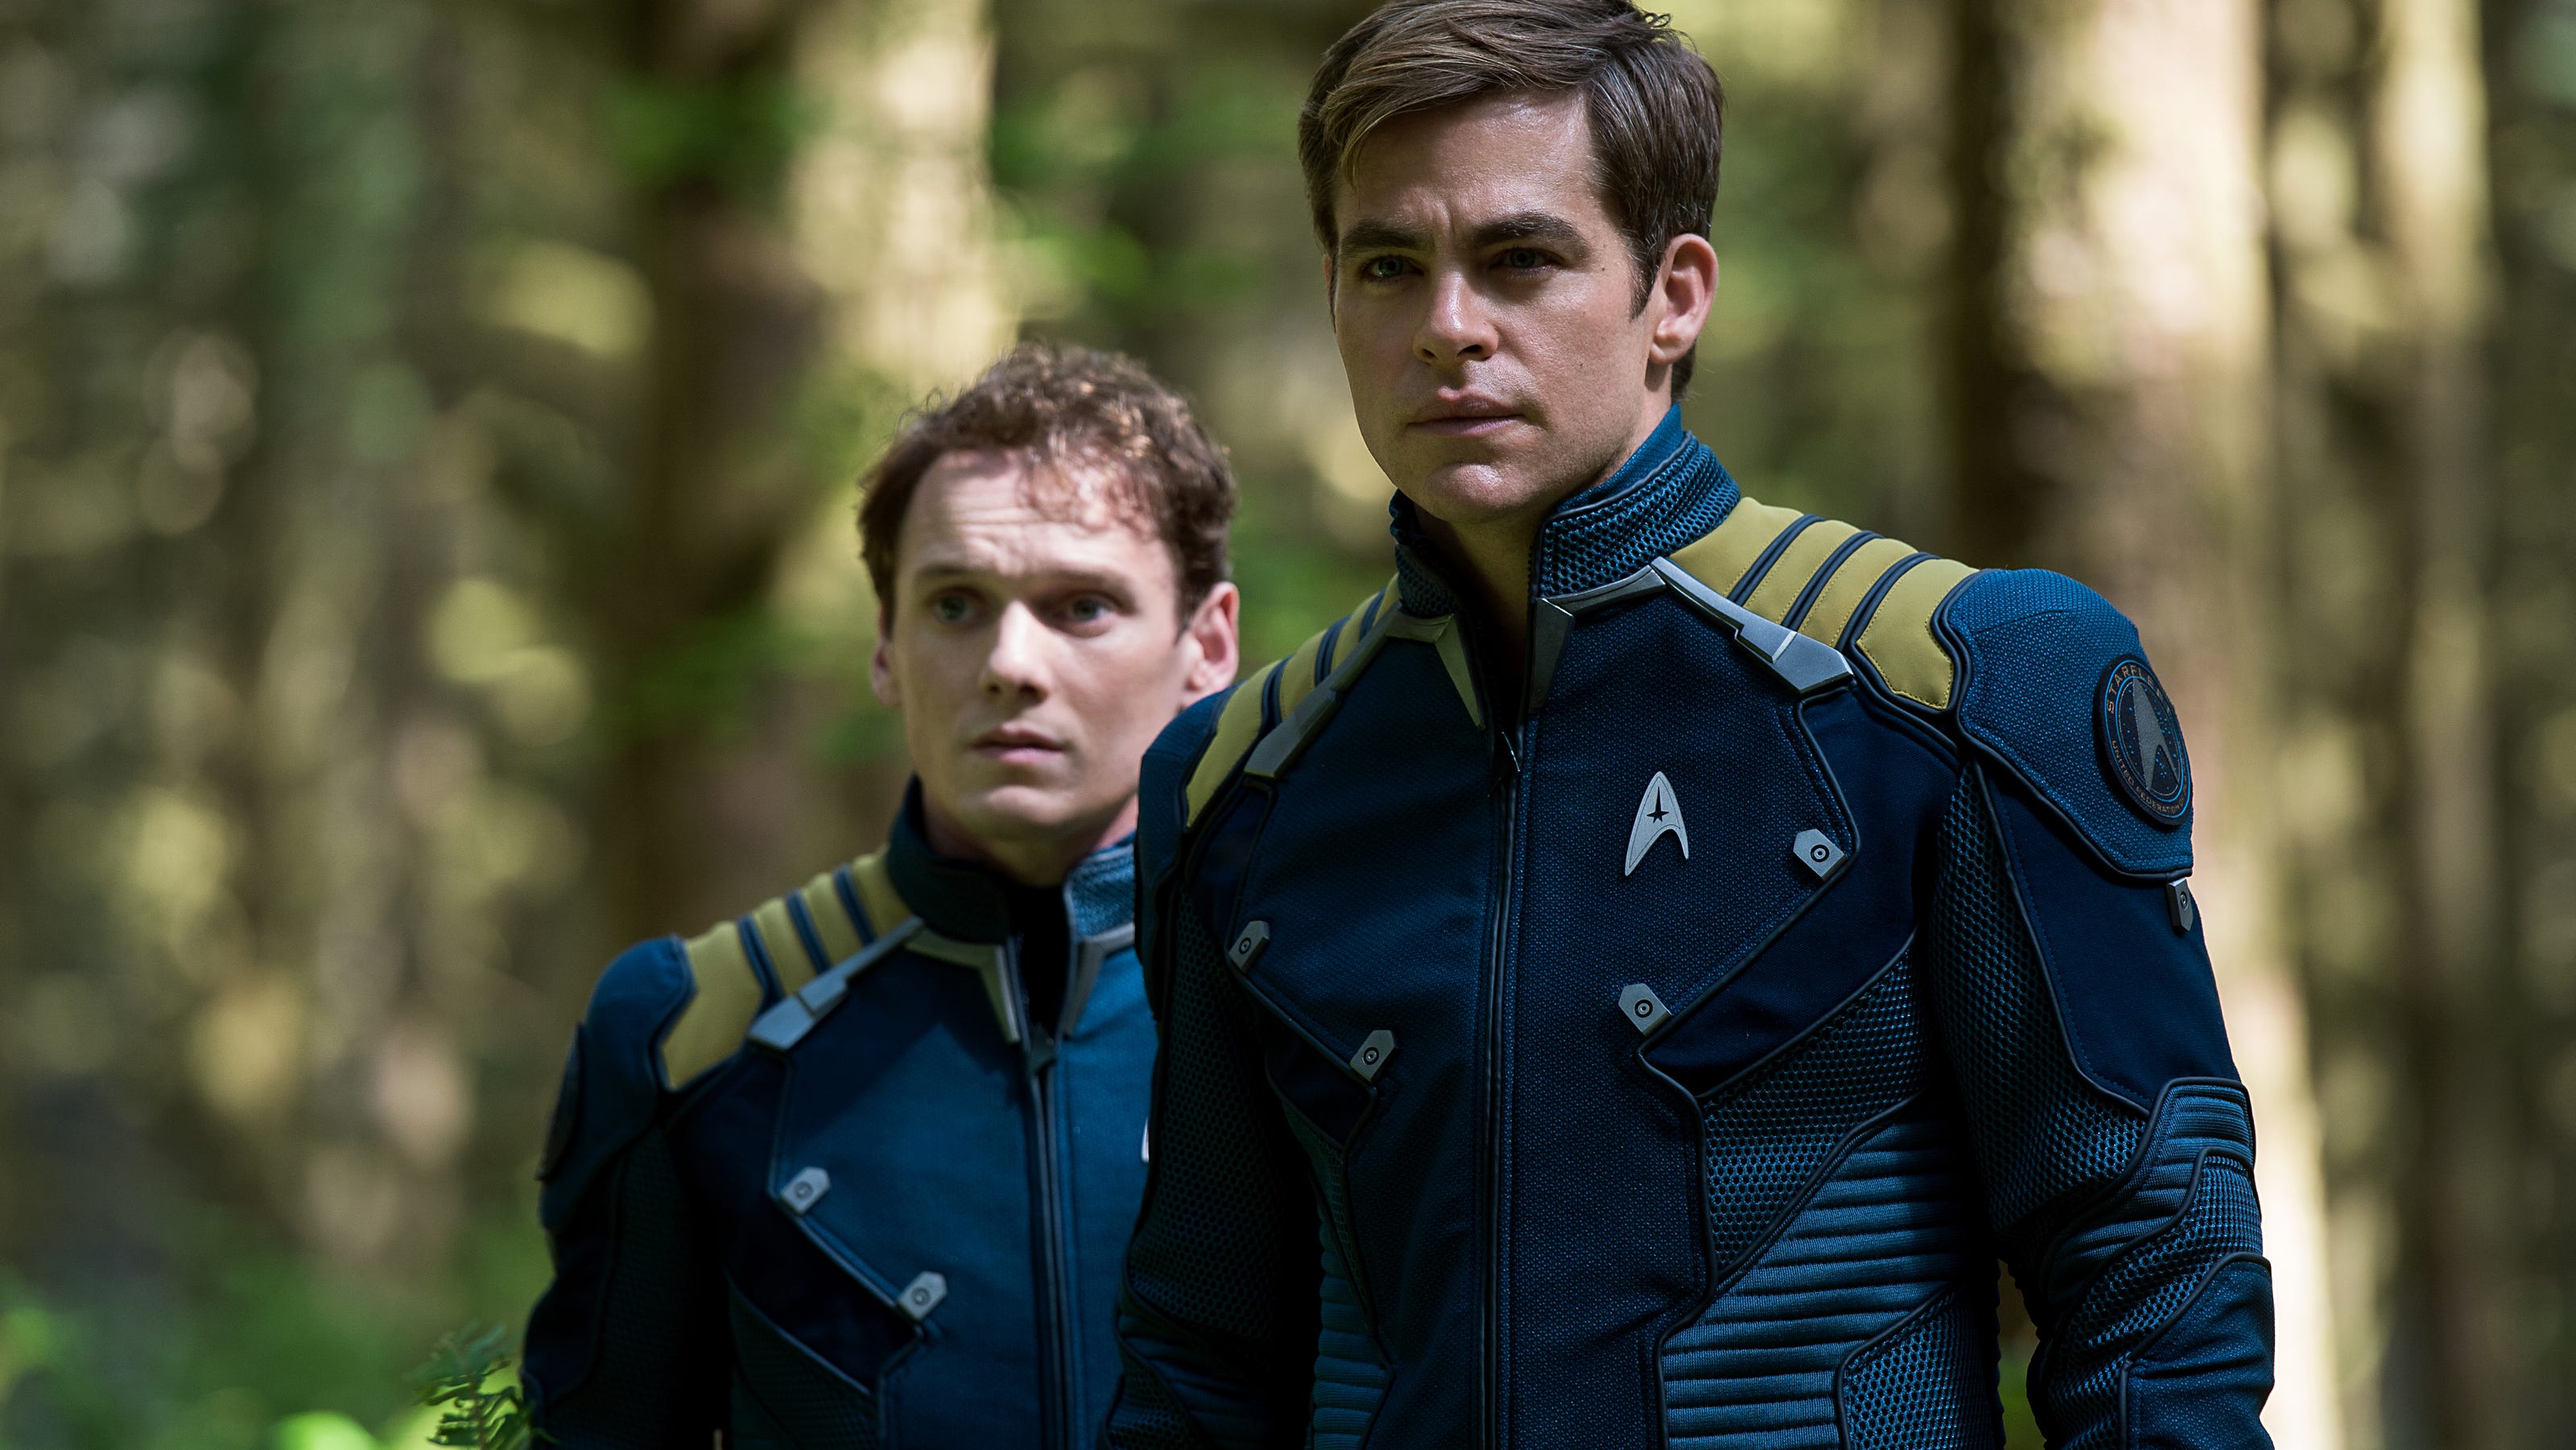 Space Force Uniforms Shades Of Star Trek And Battlestar Galactica